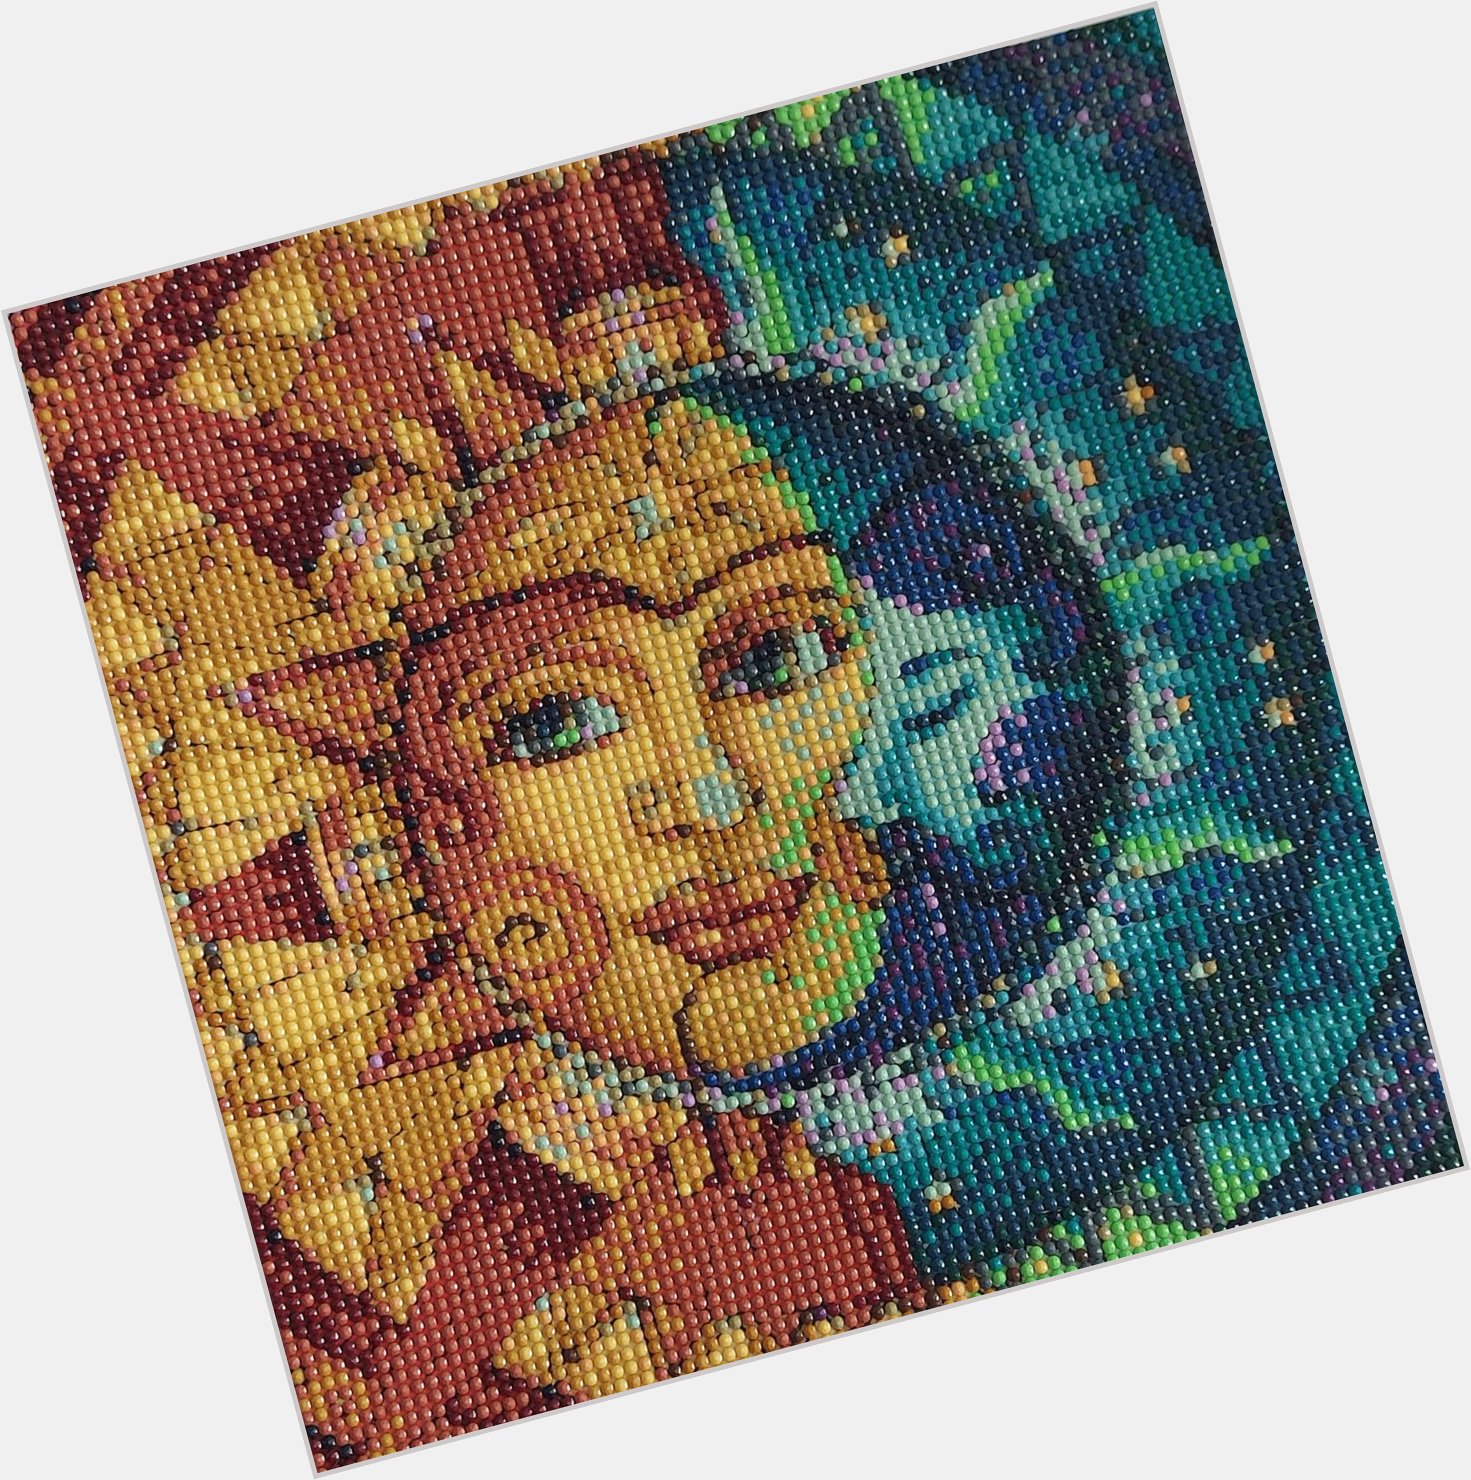 Happy Birthday Roland Orzabal 22/08/21   Diamond Dots:- The Sun & The Moon by Holly S 